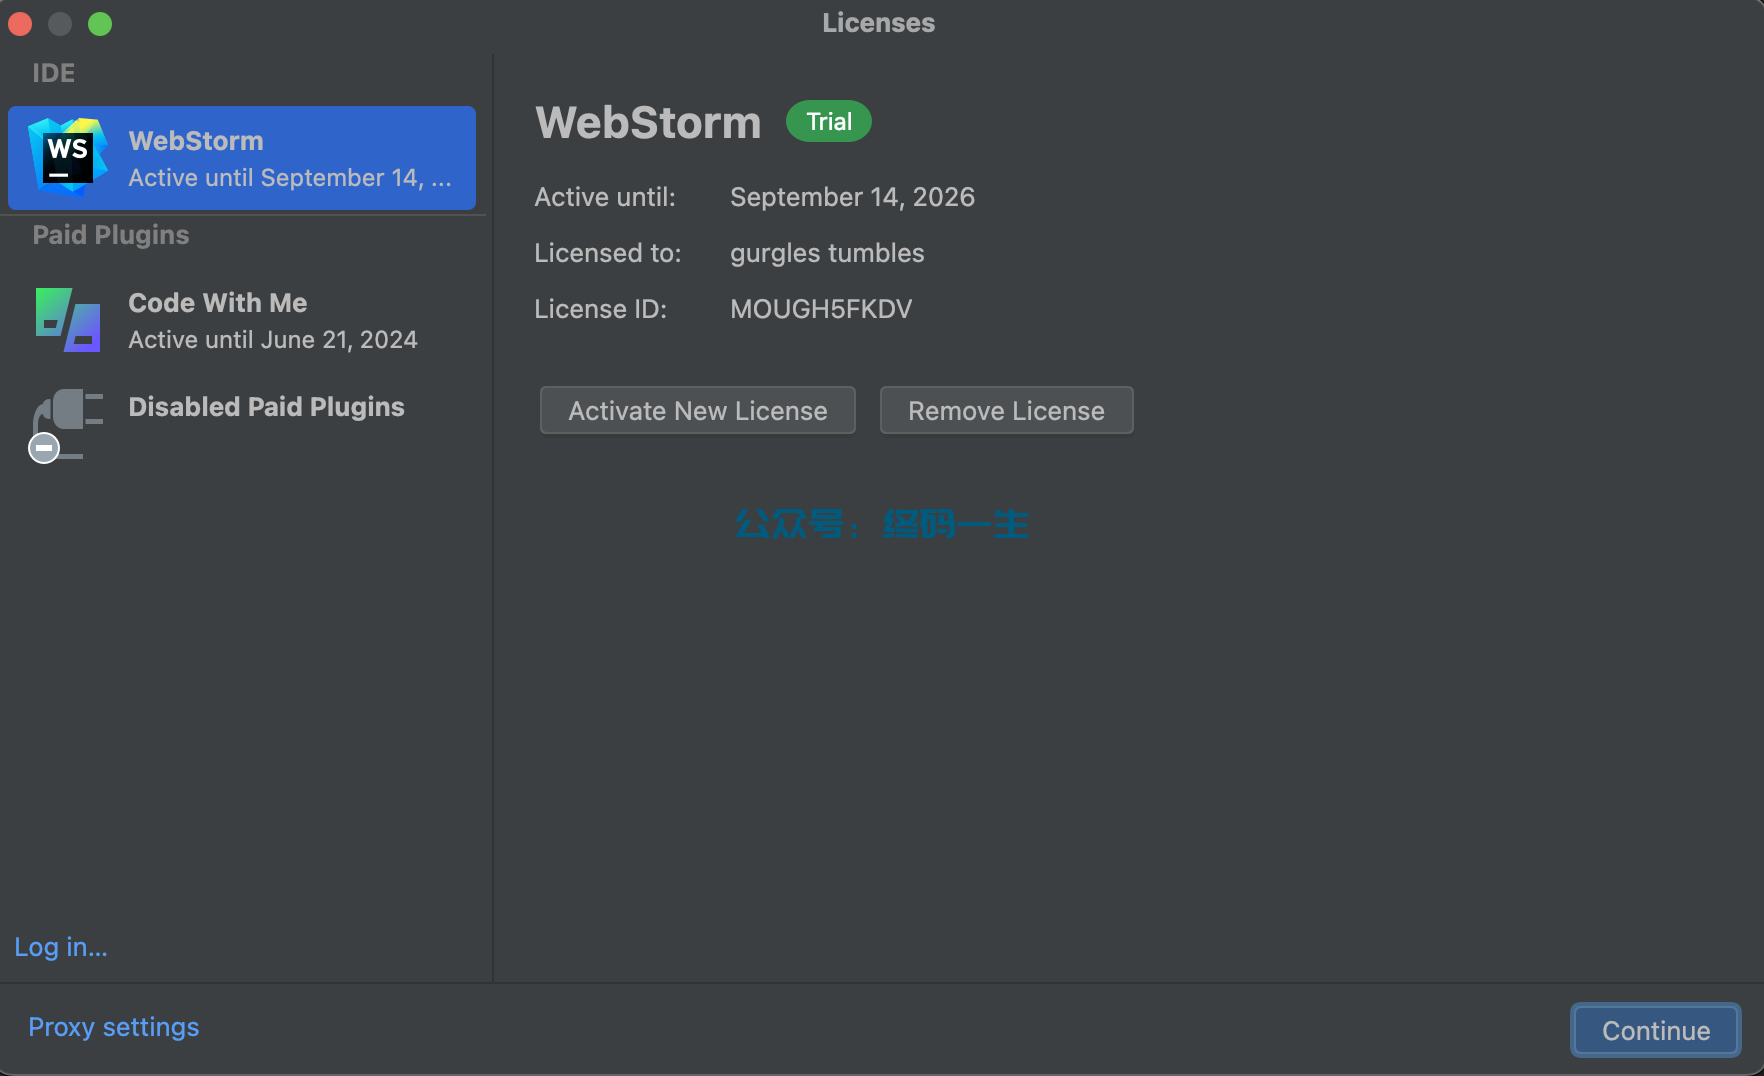 PyCharm2024.1.4激活码(WebStorm 2024.1.4 永久激活成功教程工具 激活码 全家桶激活教程 （亲测）)